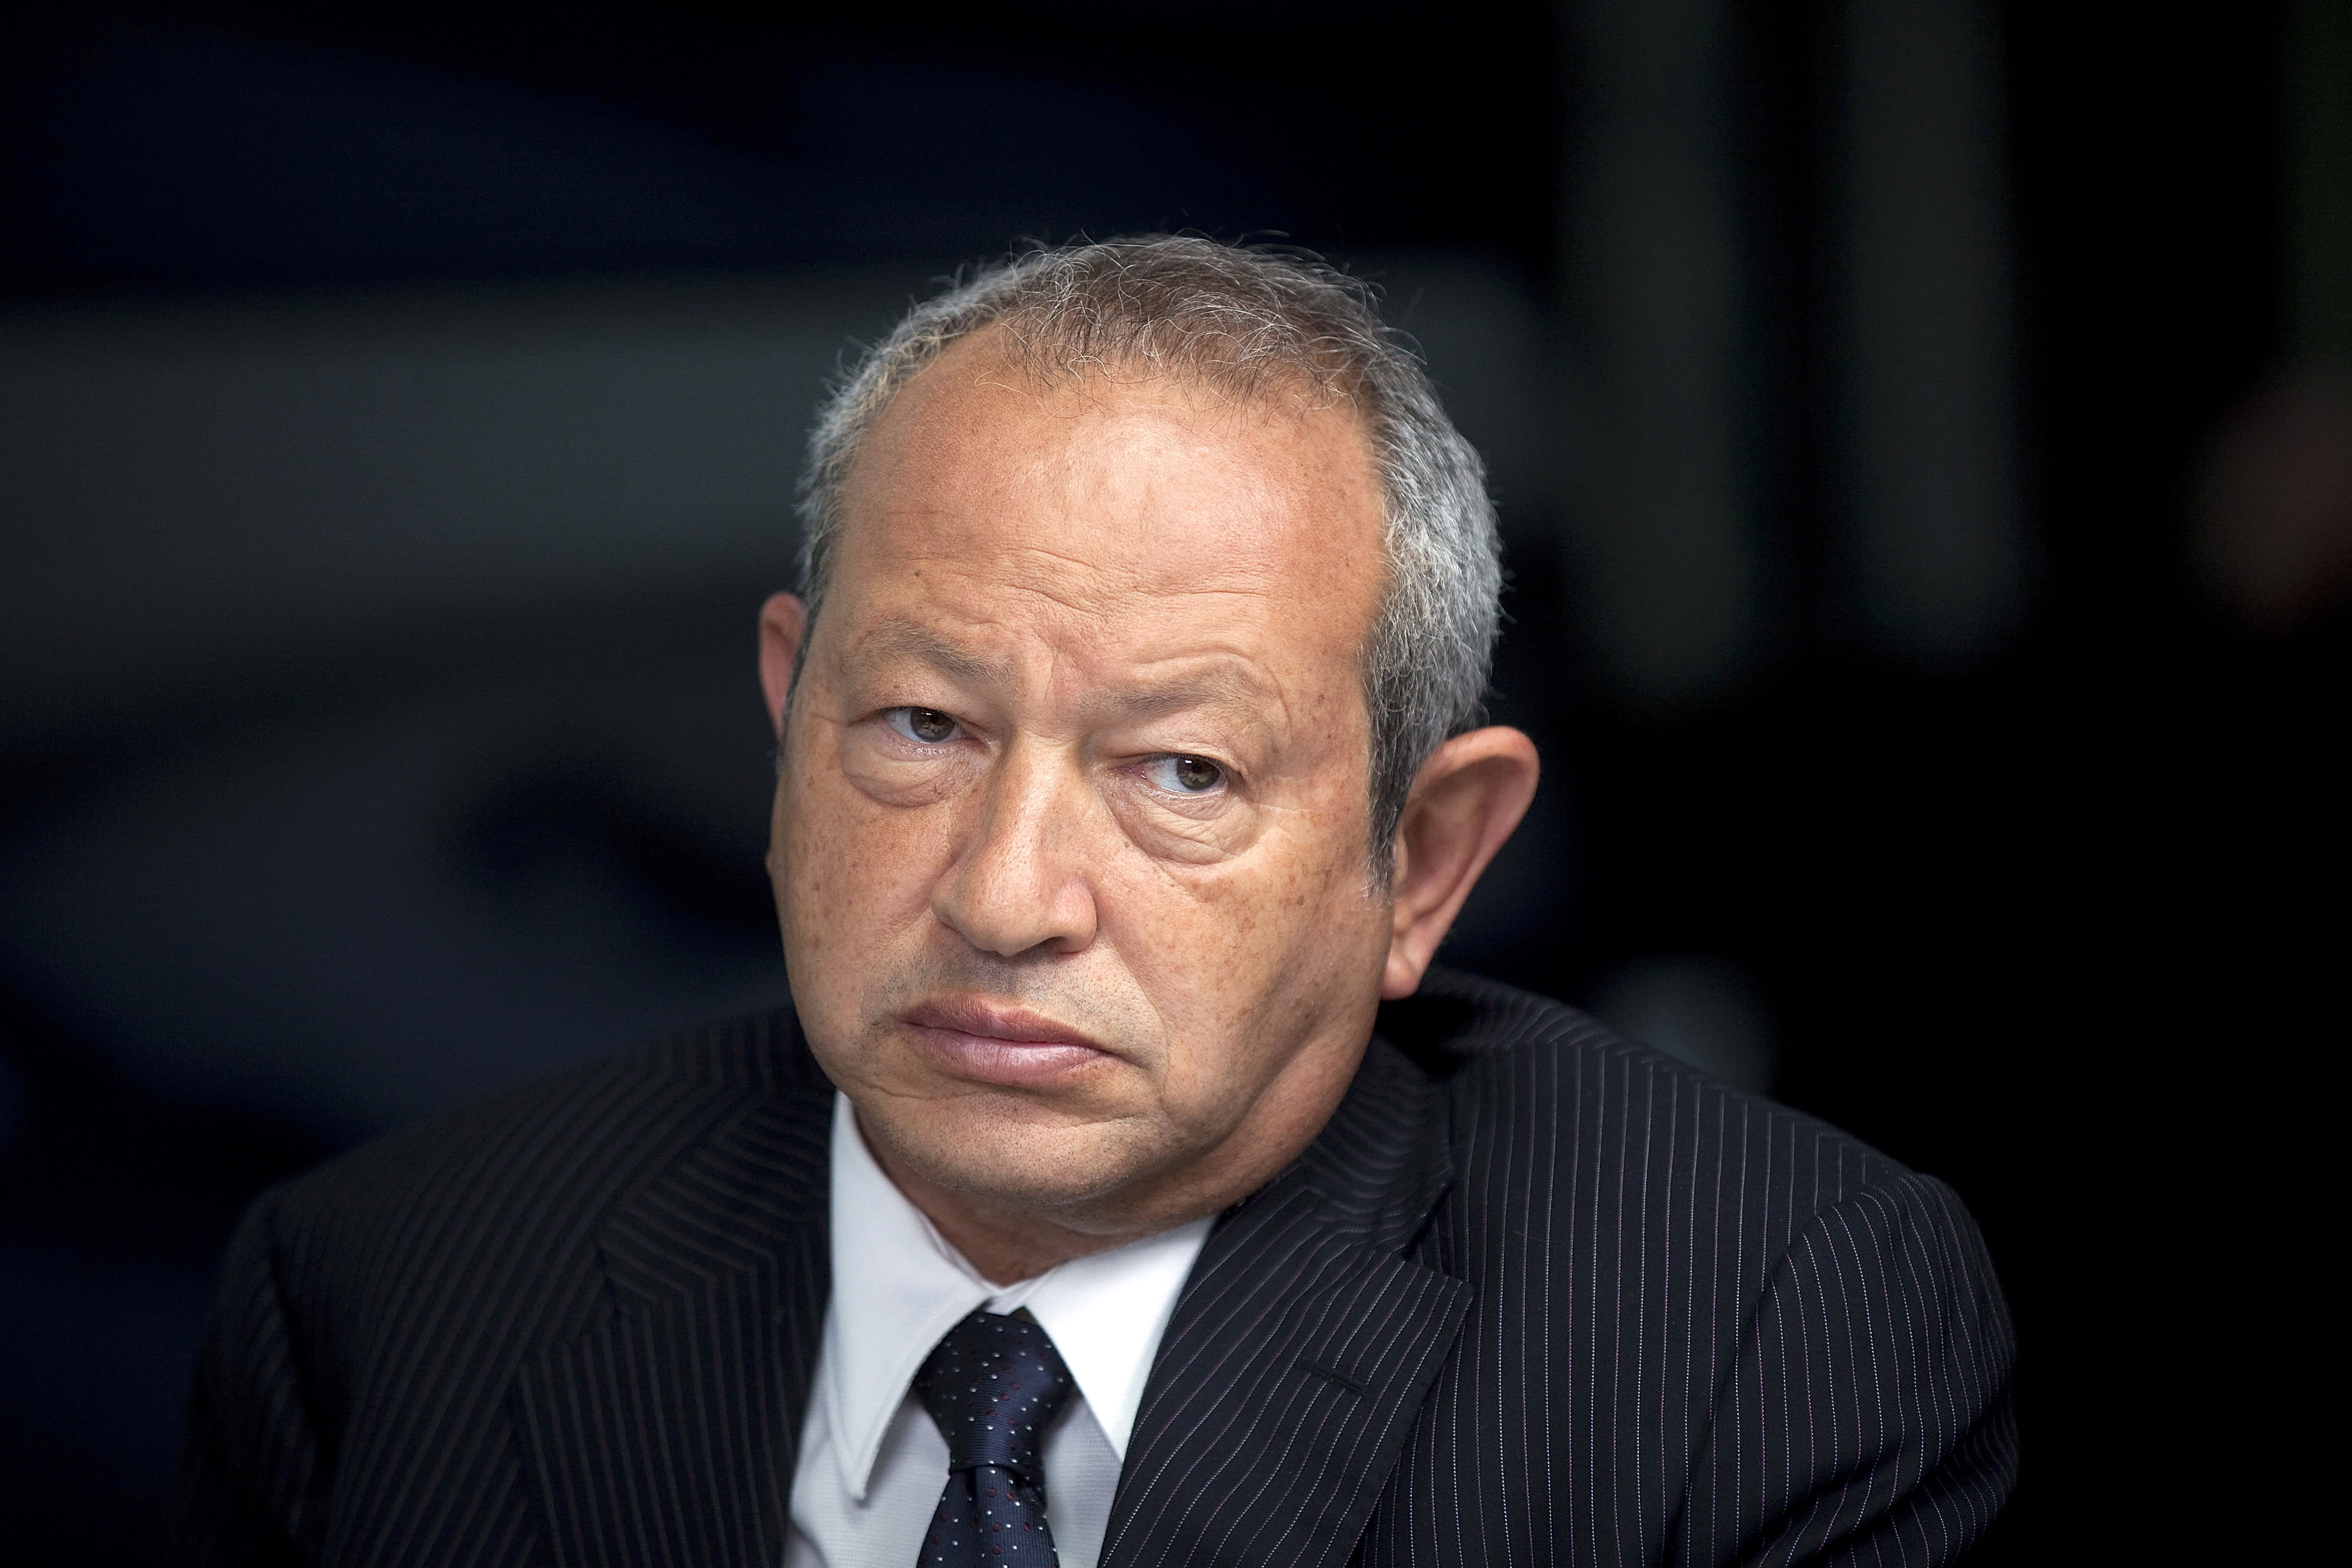 Erdogan fired Turkey’s central bank chief, adding Naguib Sawiris to the mess